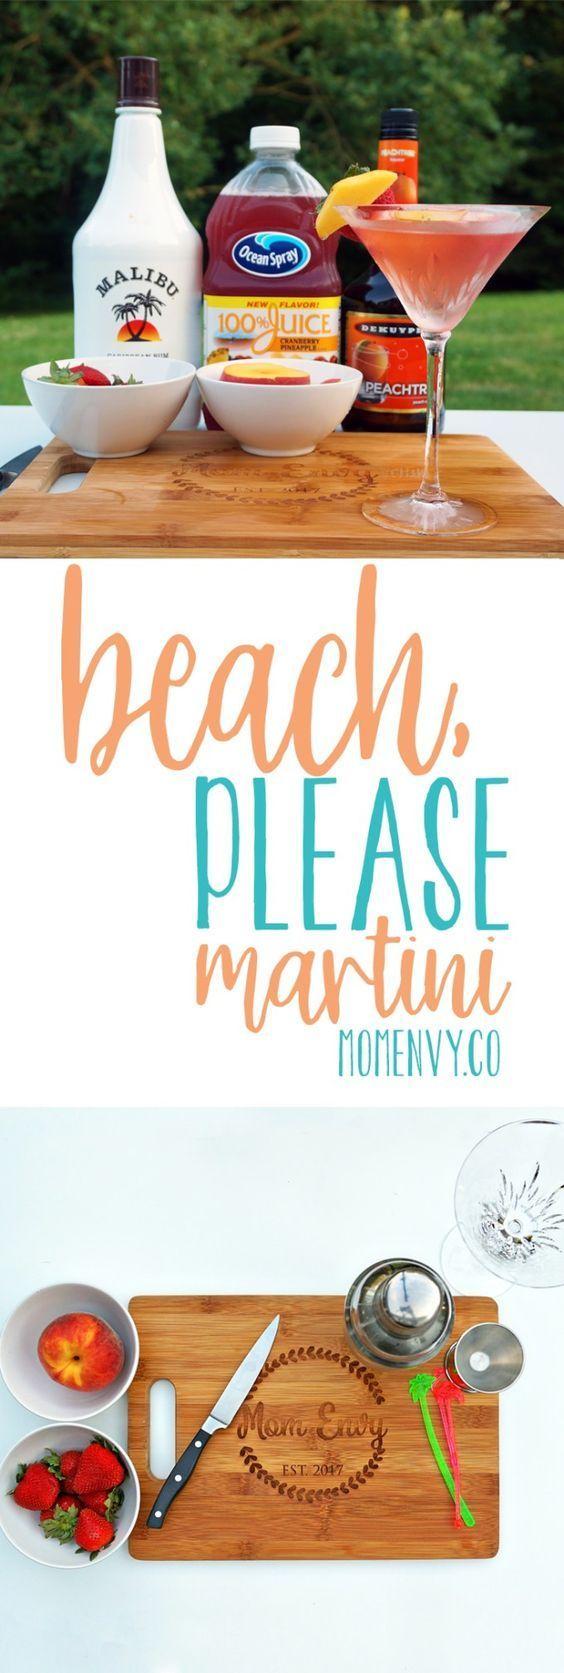 Wedding - Beach Please Martini - An Easy And Fruity Summer Cocktail